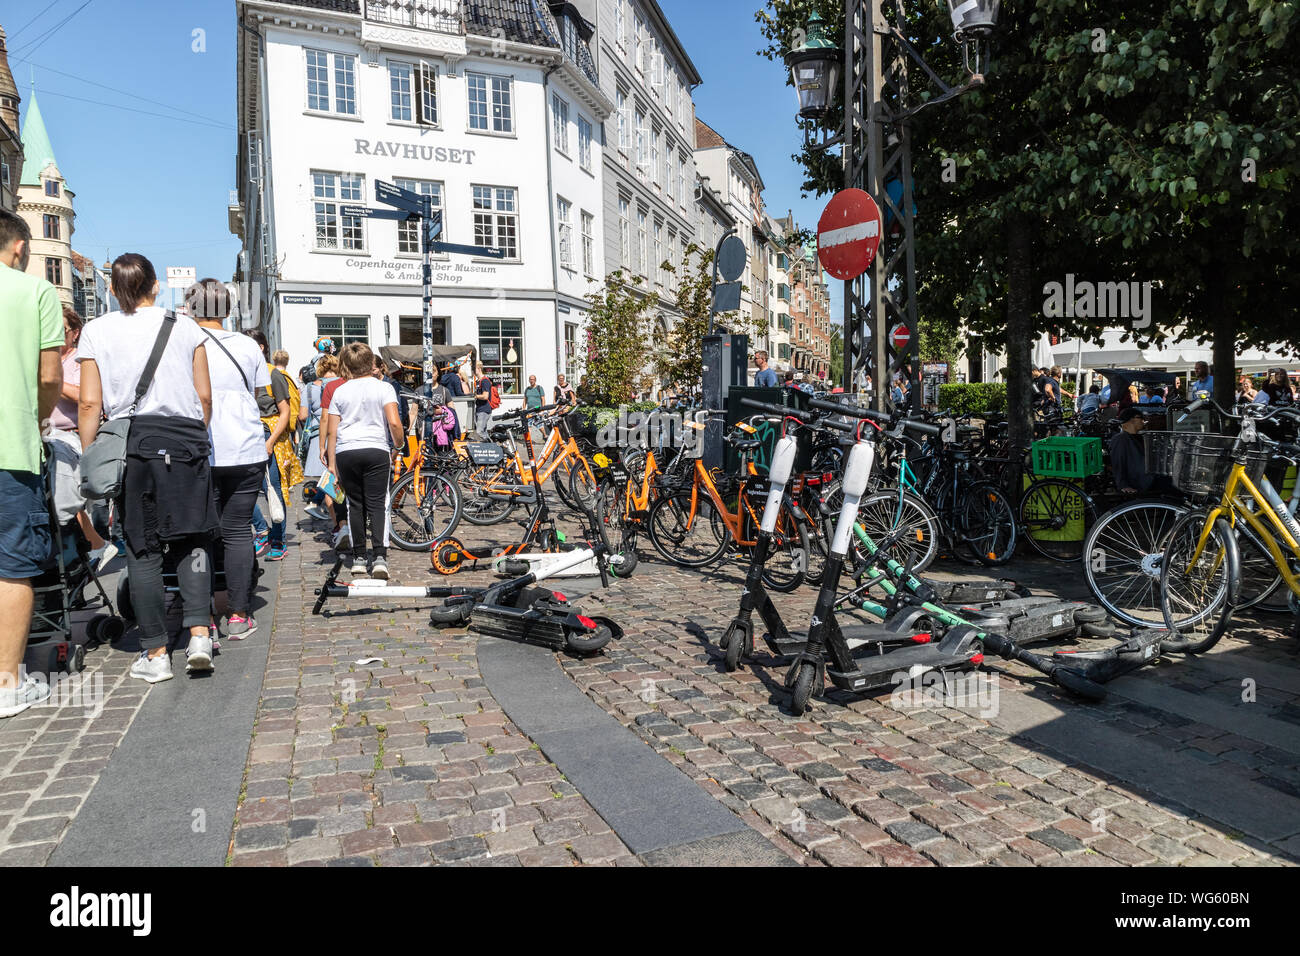 rental Electric E scooter , escooter, e-scooter knocked over and blocking the sidewalks in Kopenhagen - August 2019 - Kopenhagen, Denmark, Europe Stock Photo